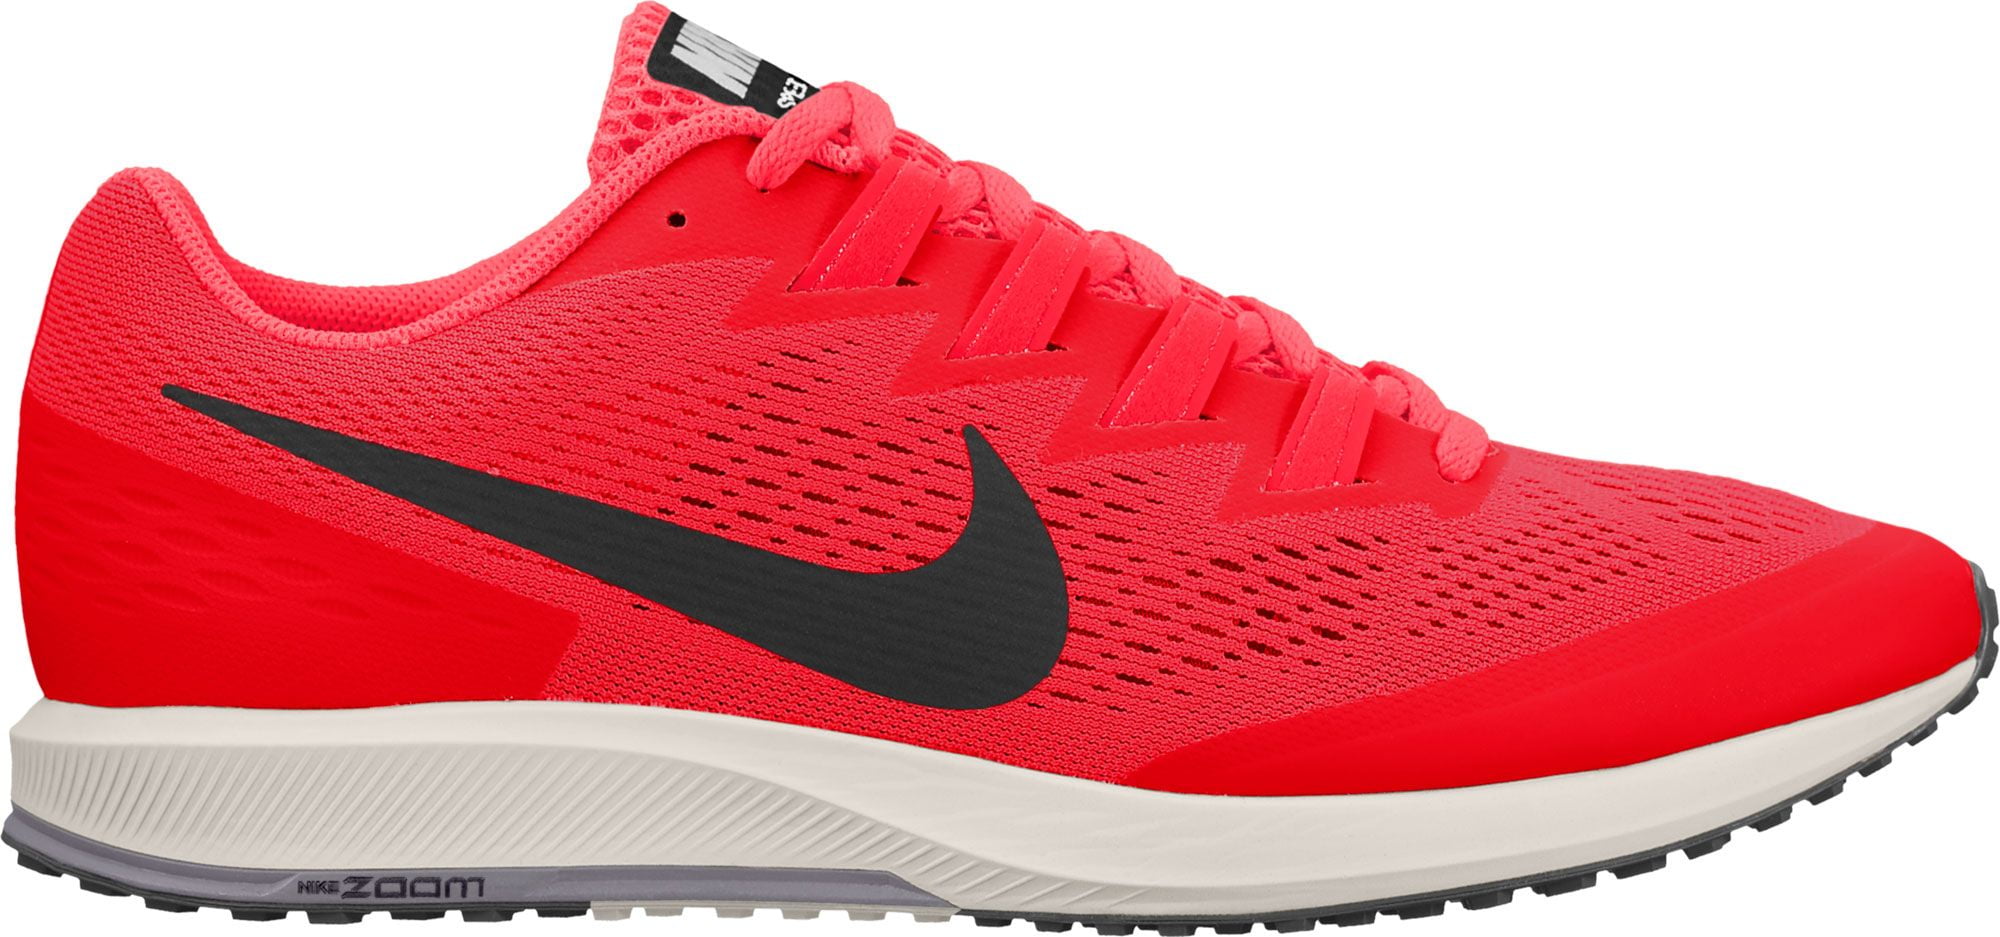 Nike - Nike Zoom Speed Rival 6 Cross Country Shoes - Walmart.com ...